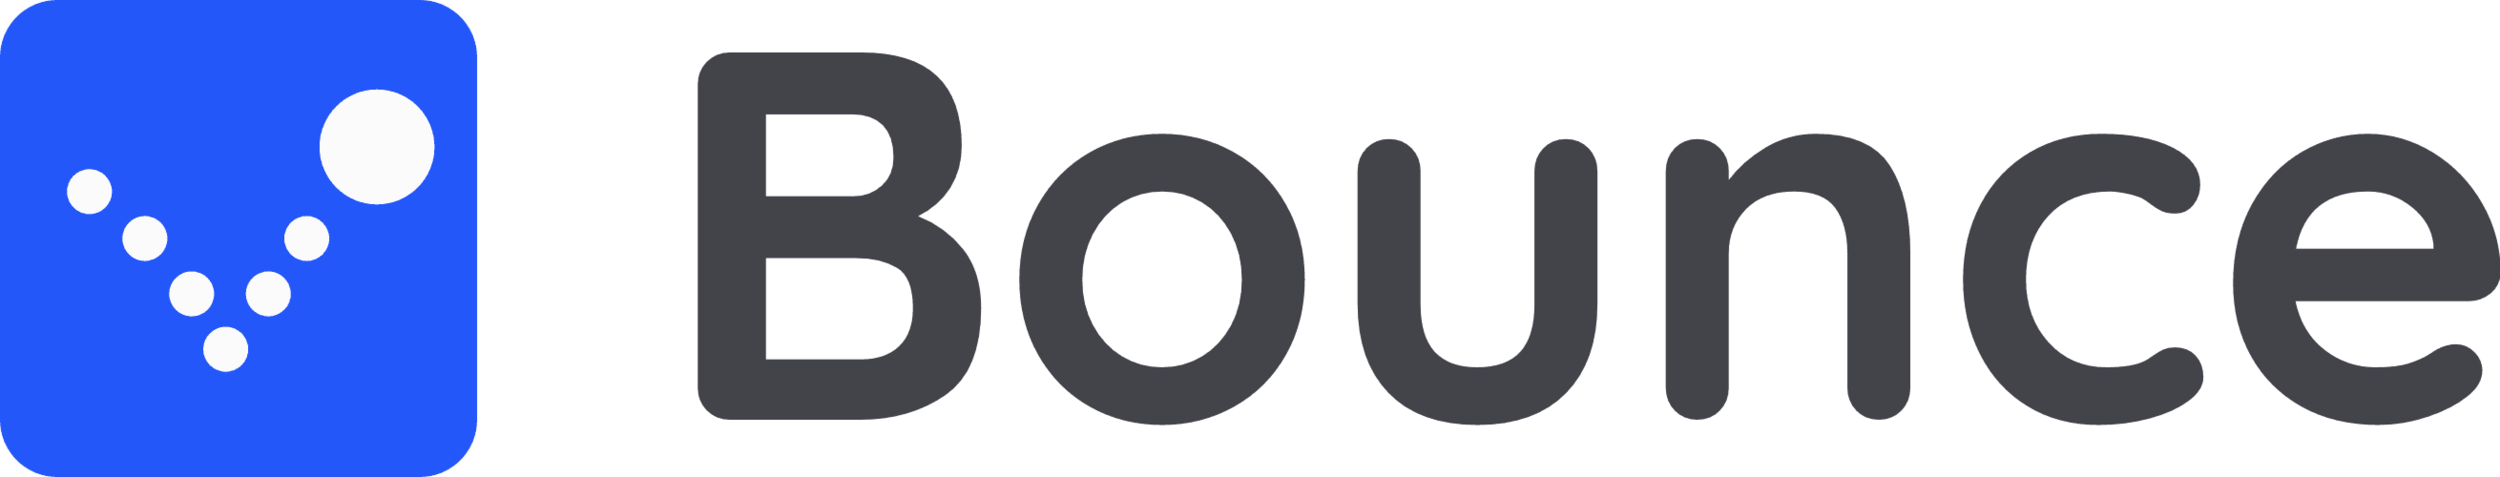 bounce logo.png